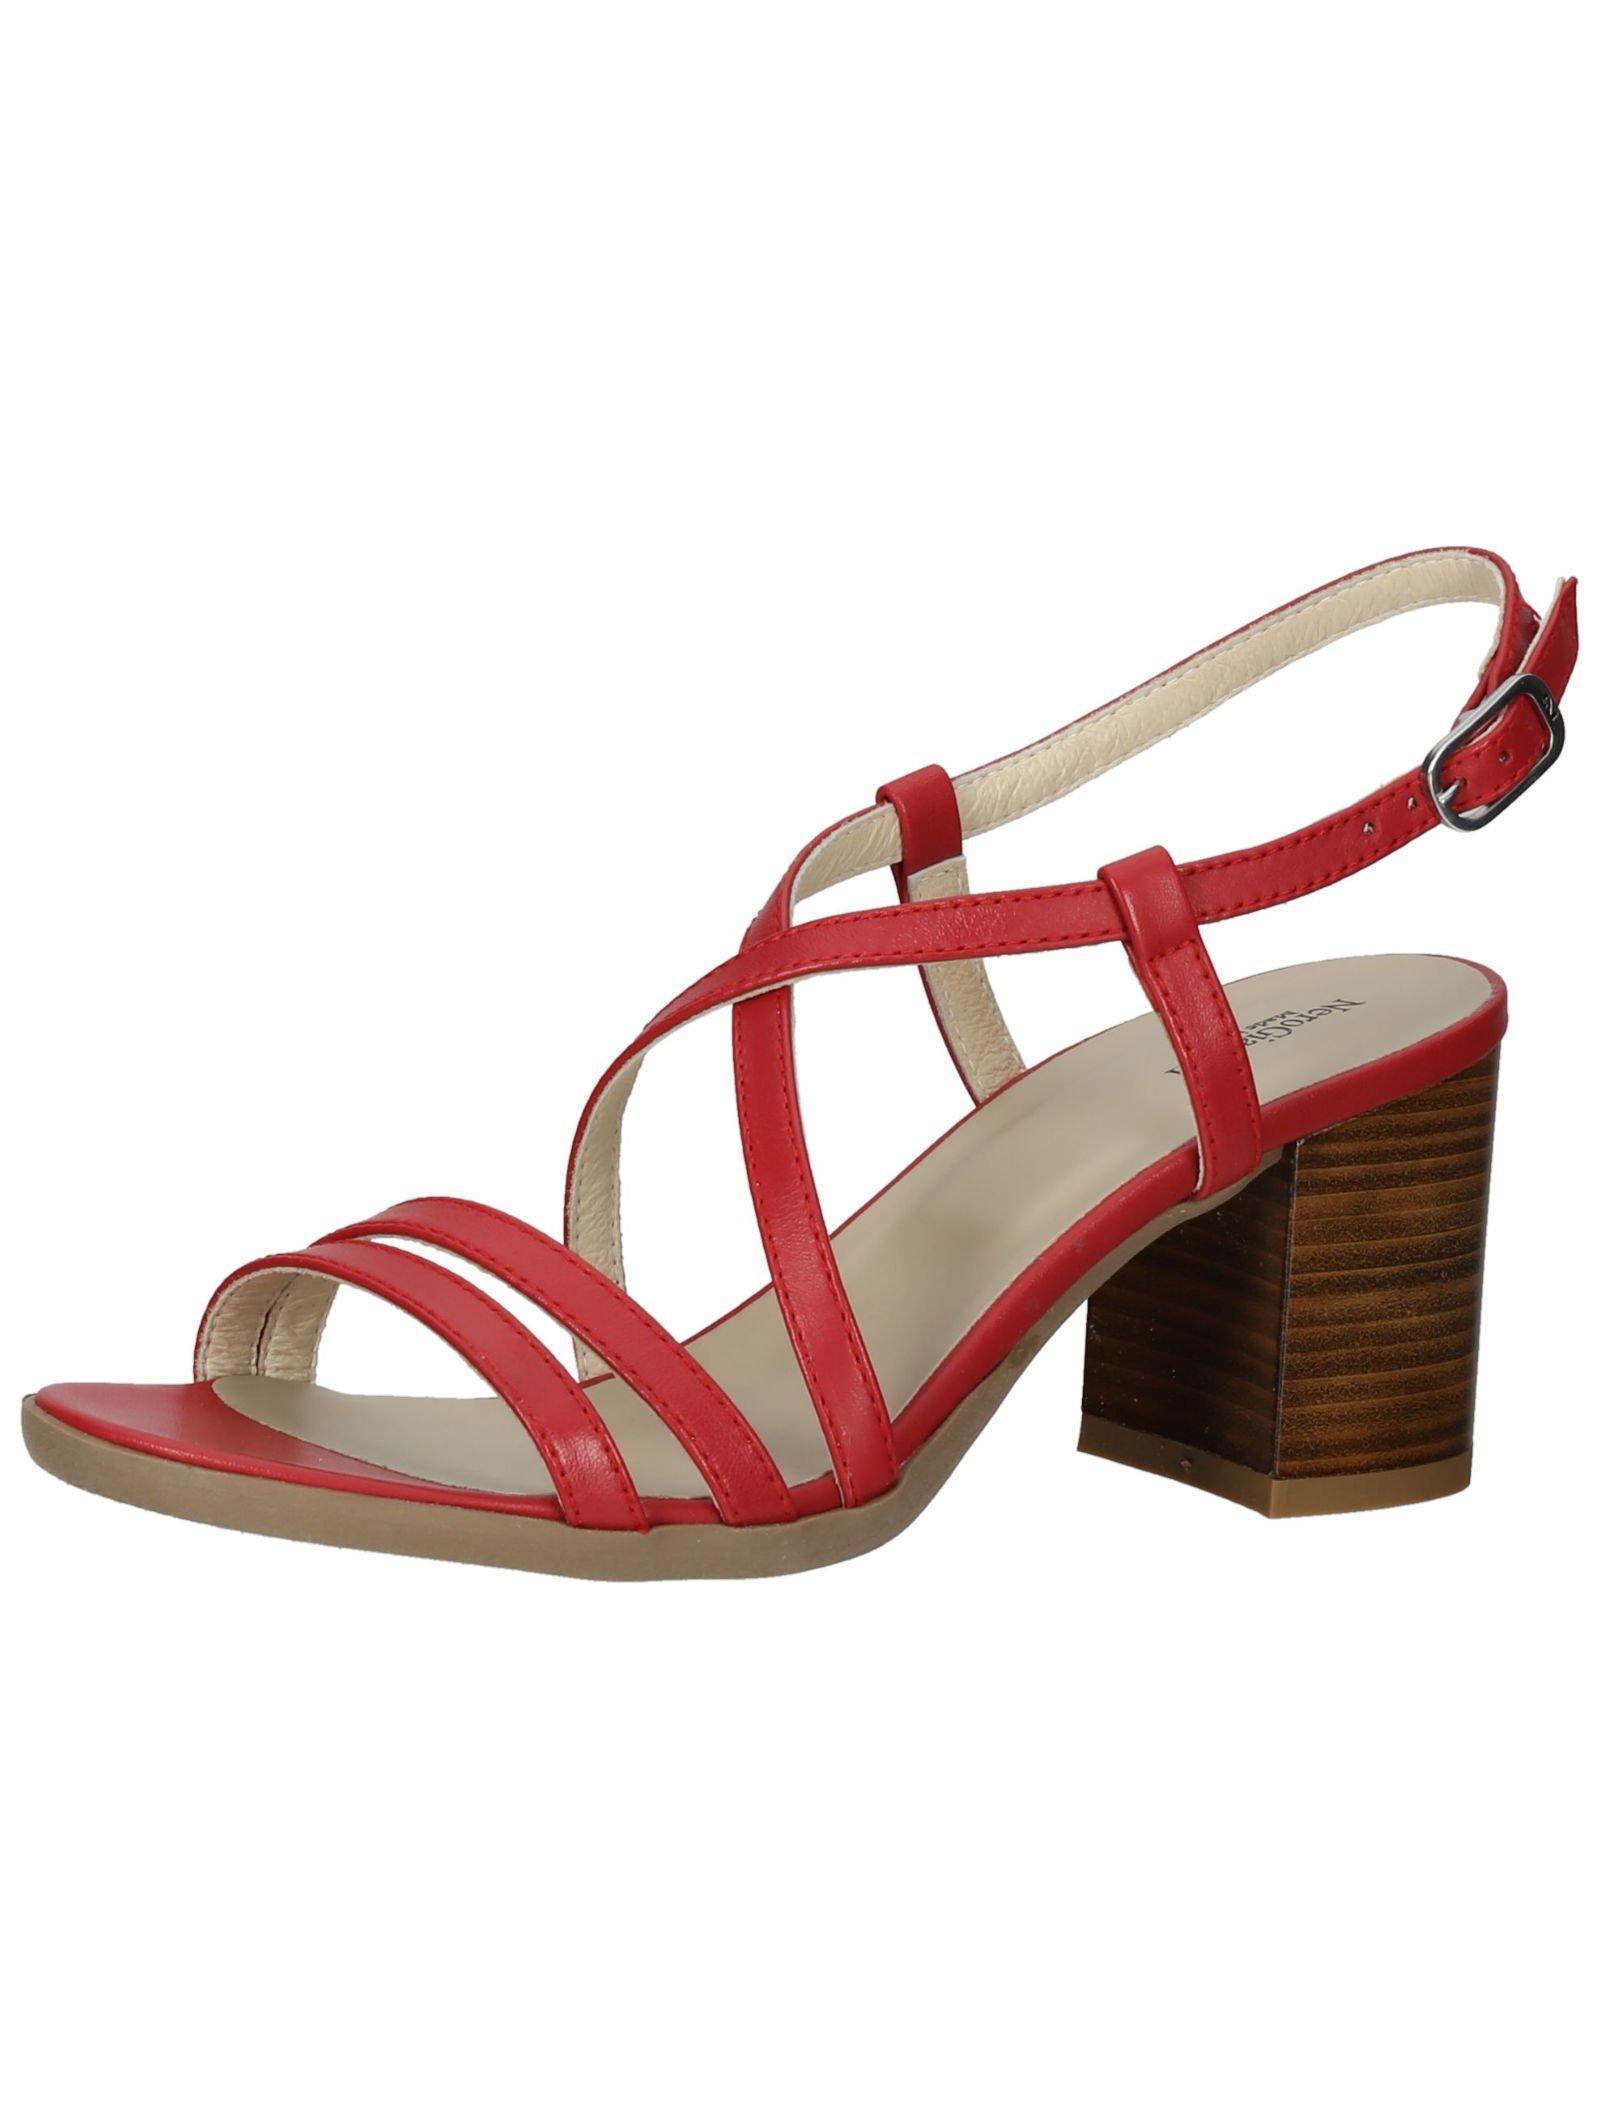 Sandalen Damen Rot Bunt 38 von Nero Giardini